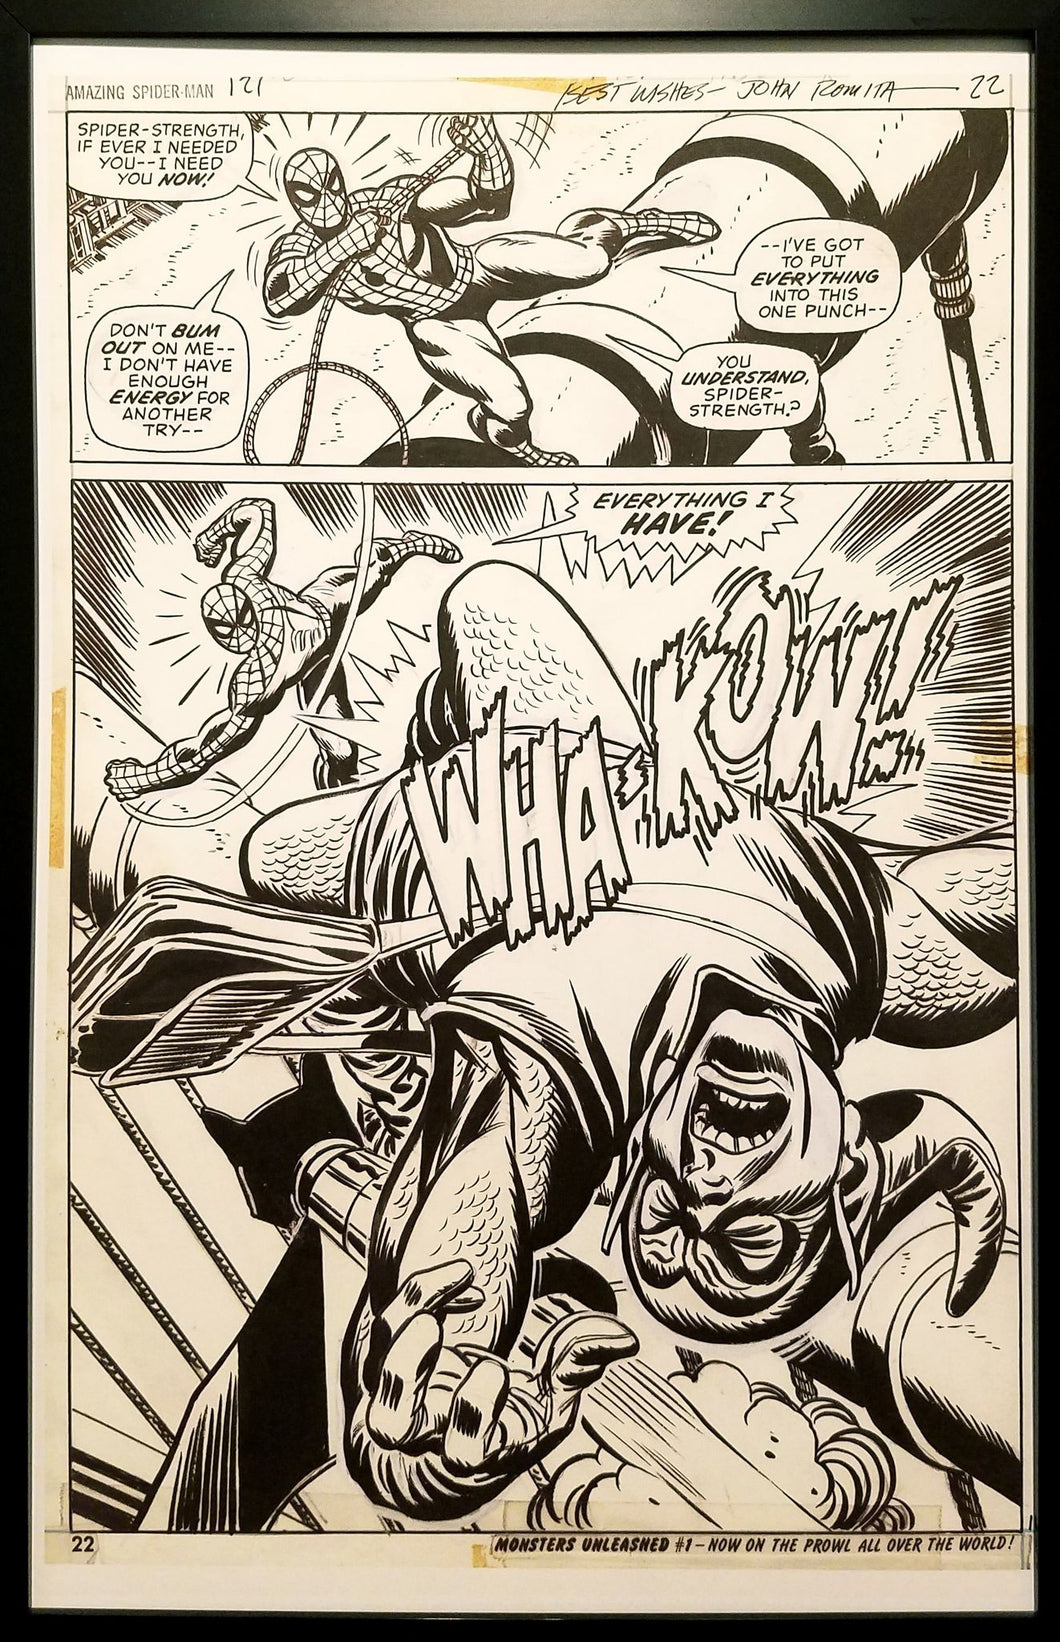 Amazing Spider-Man #121 pg. 16 Gil Kane 11x17 FRAMED Original Art Poster Marvel Comics